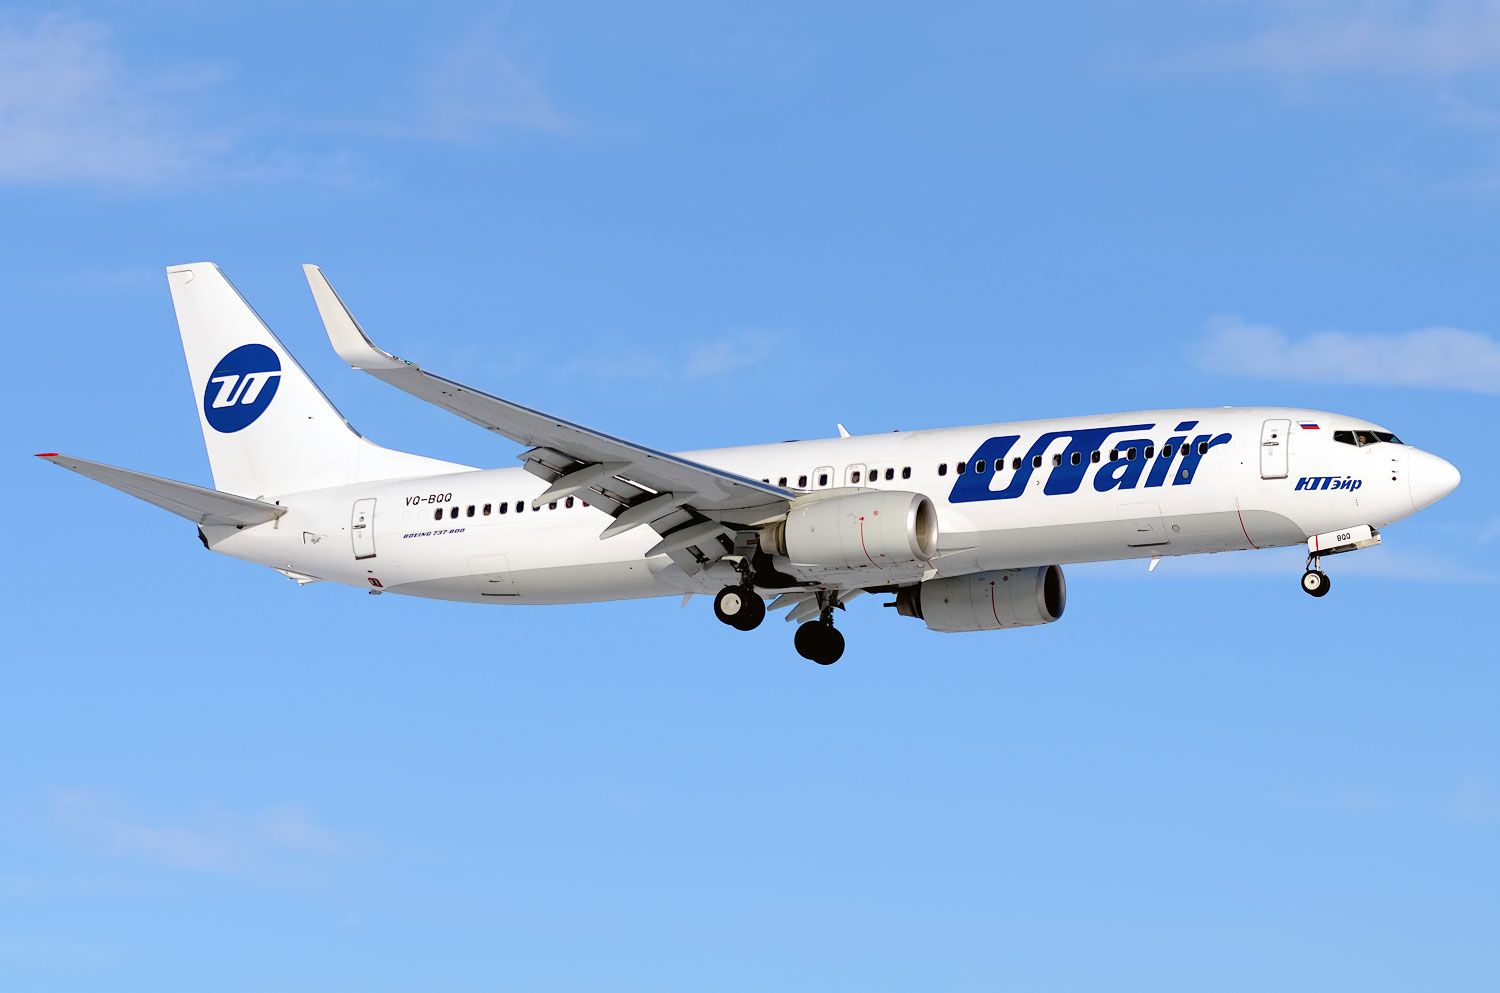 utair 737-800 in the sky 